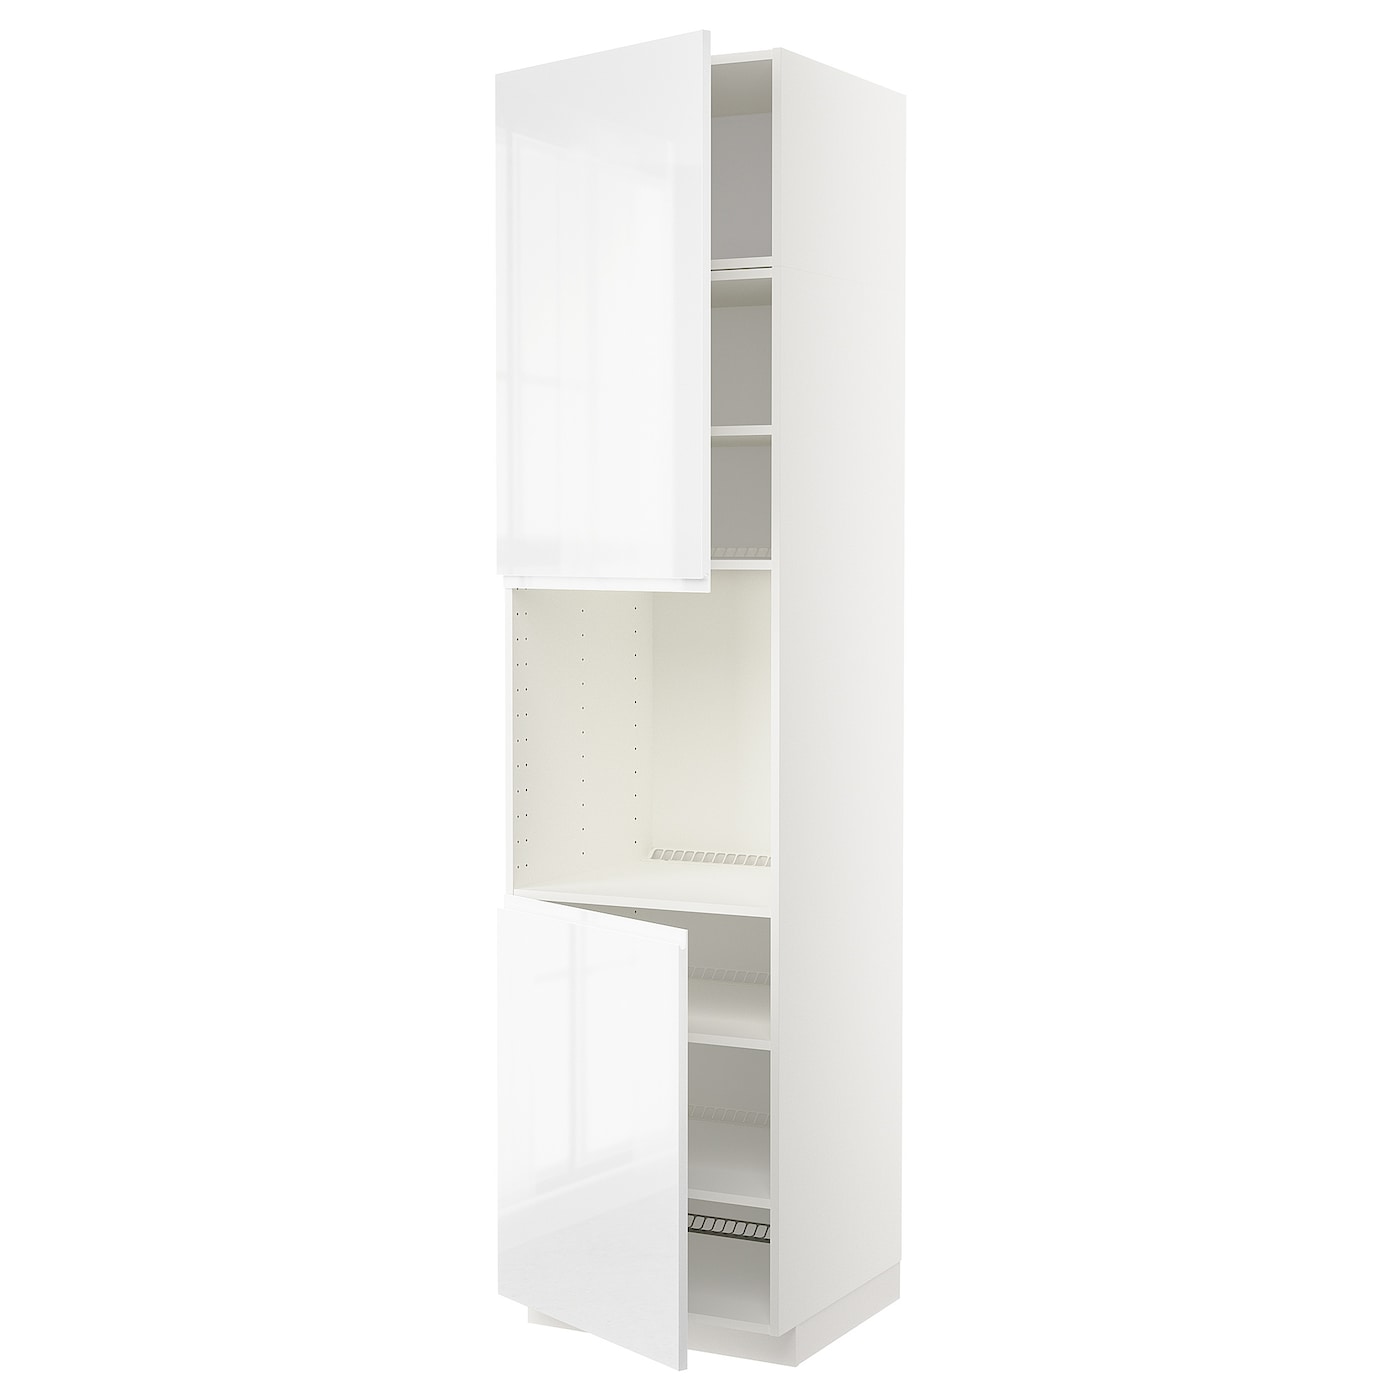 Высокий кухонный шкаф с полками - IKEA METOD/МЕТОД ИКЕА, 240х60х60 см, белый глянцевый